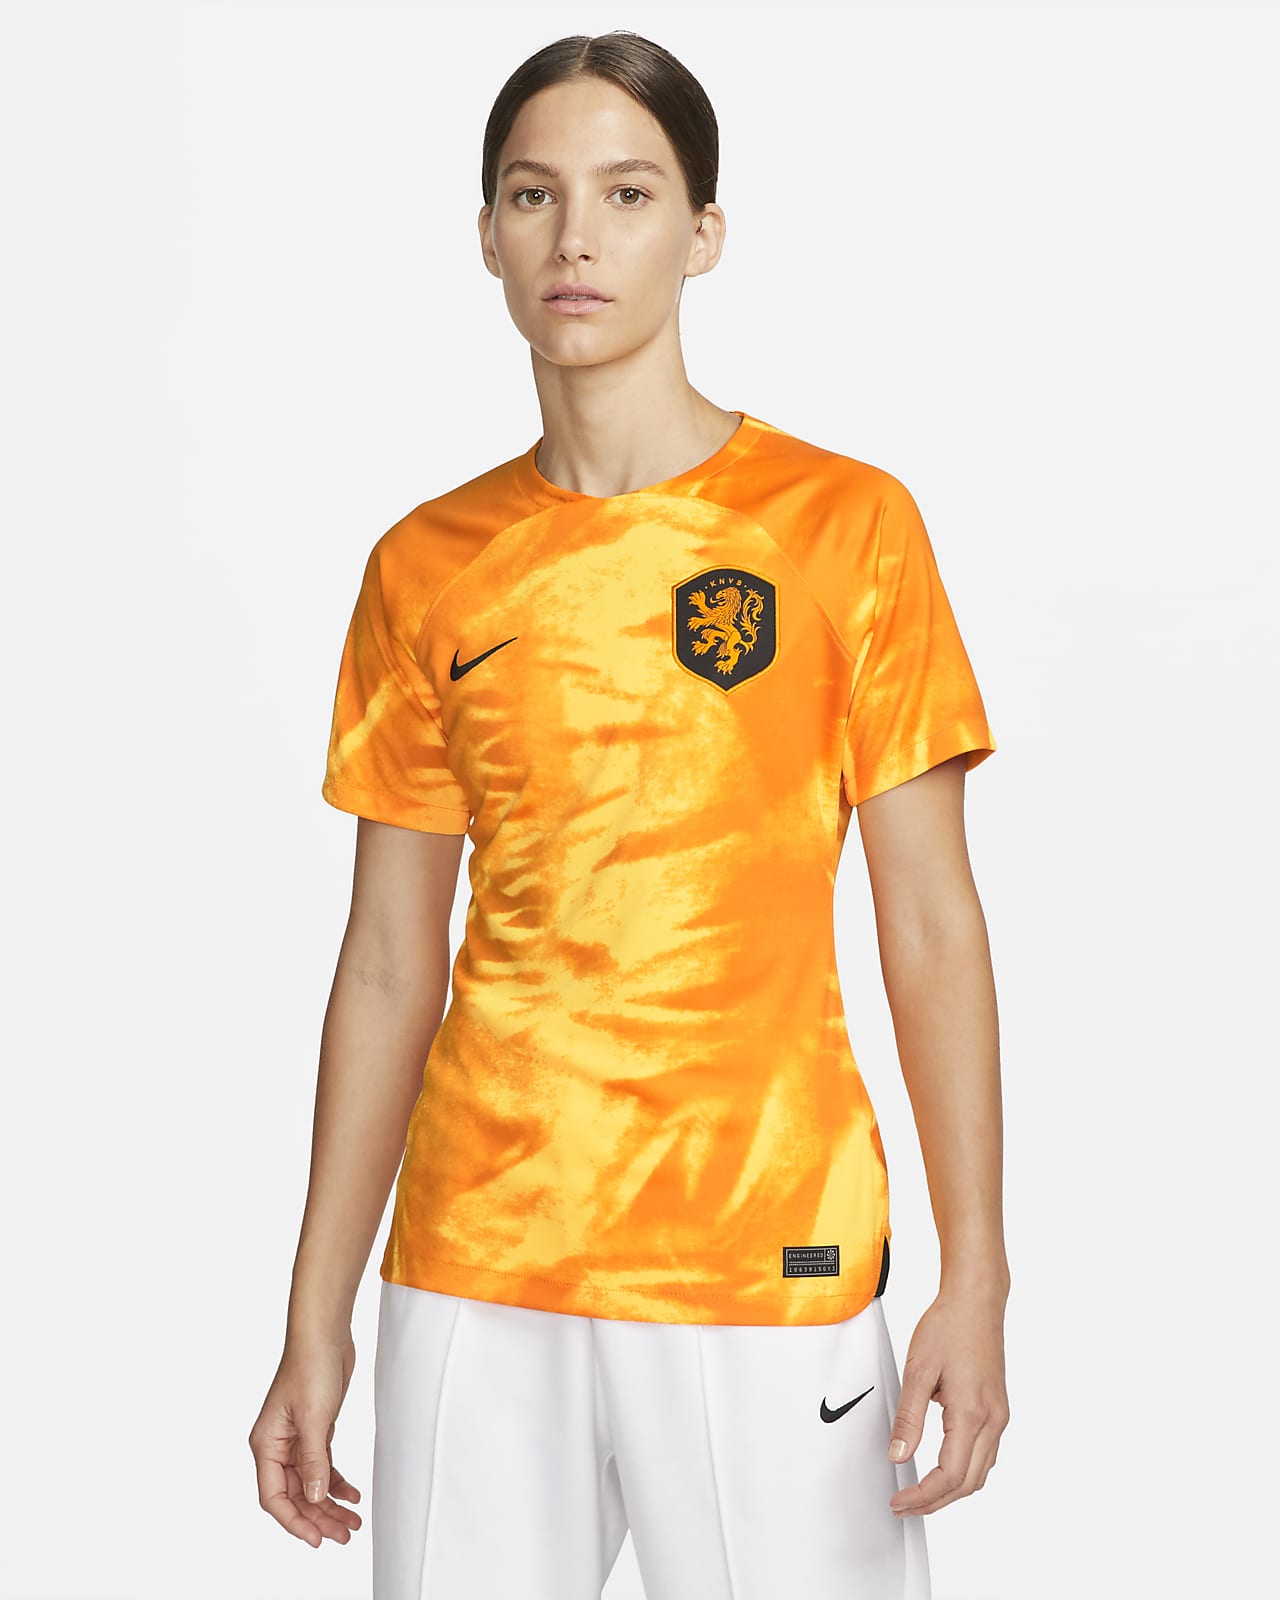 soccer jersey orange